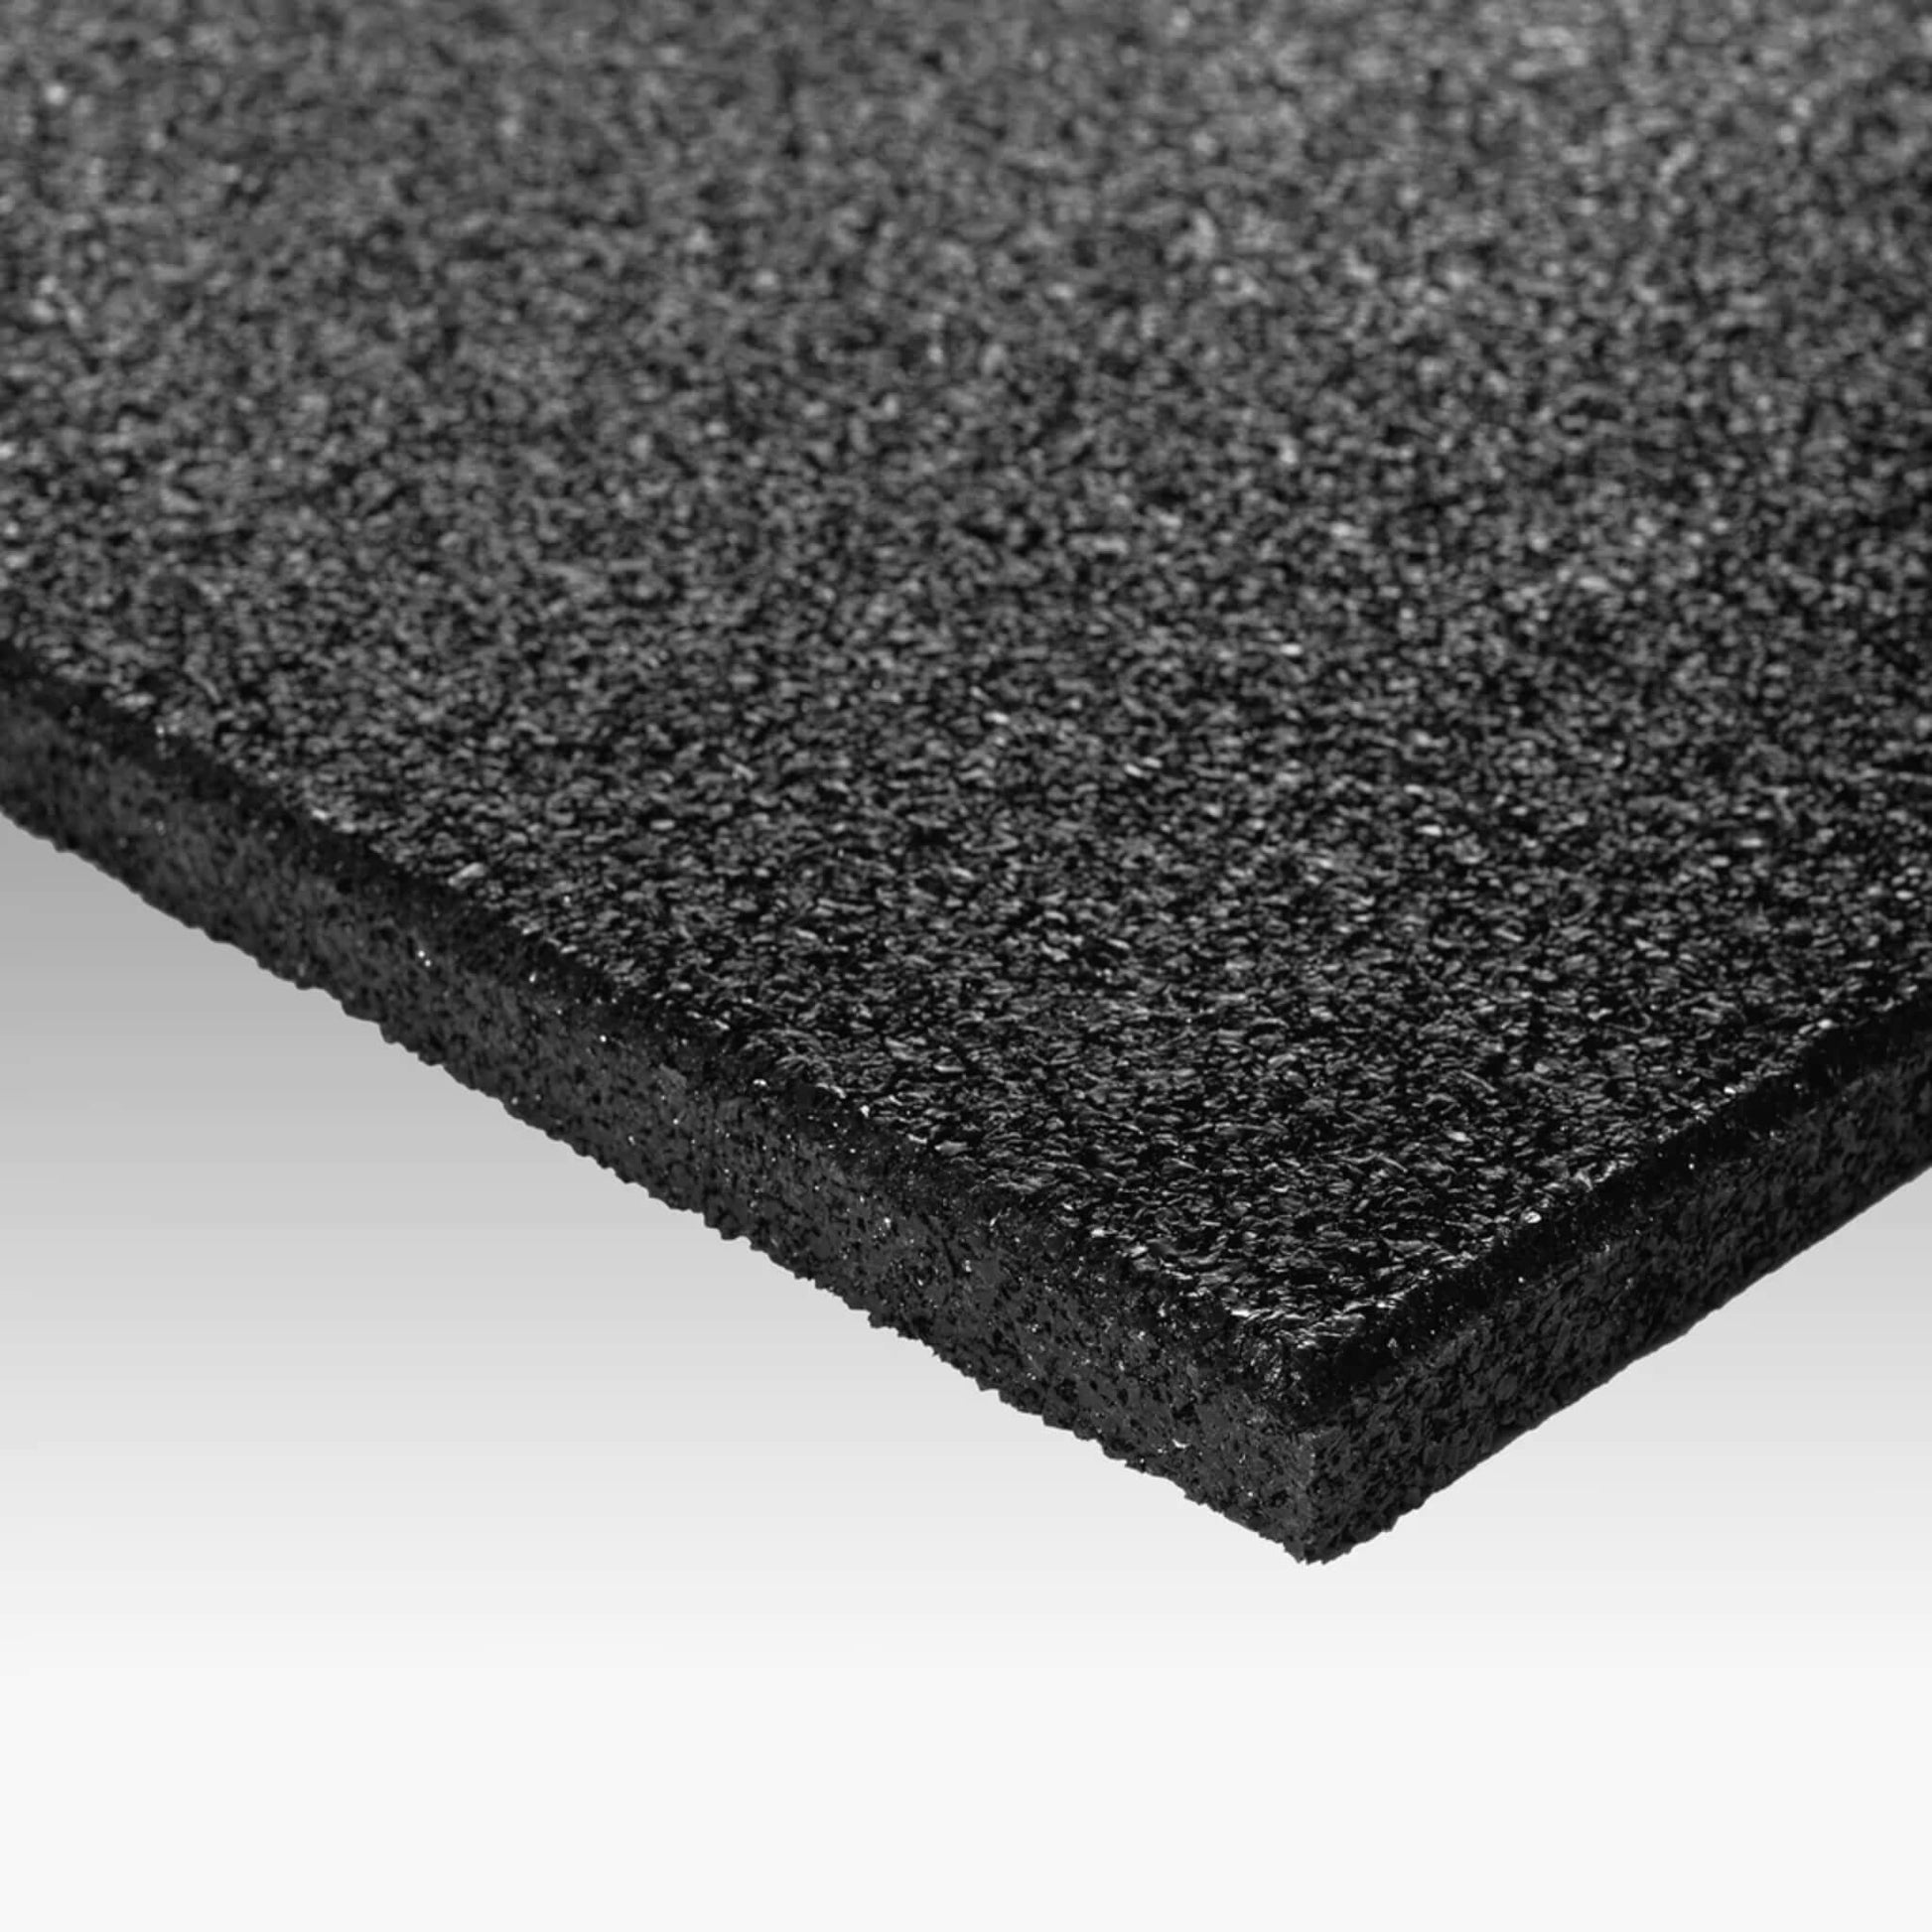 Activ Gym Flooring Tiles (Black) 50cm x 50cm x 15mm edge